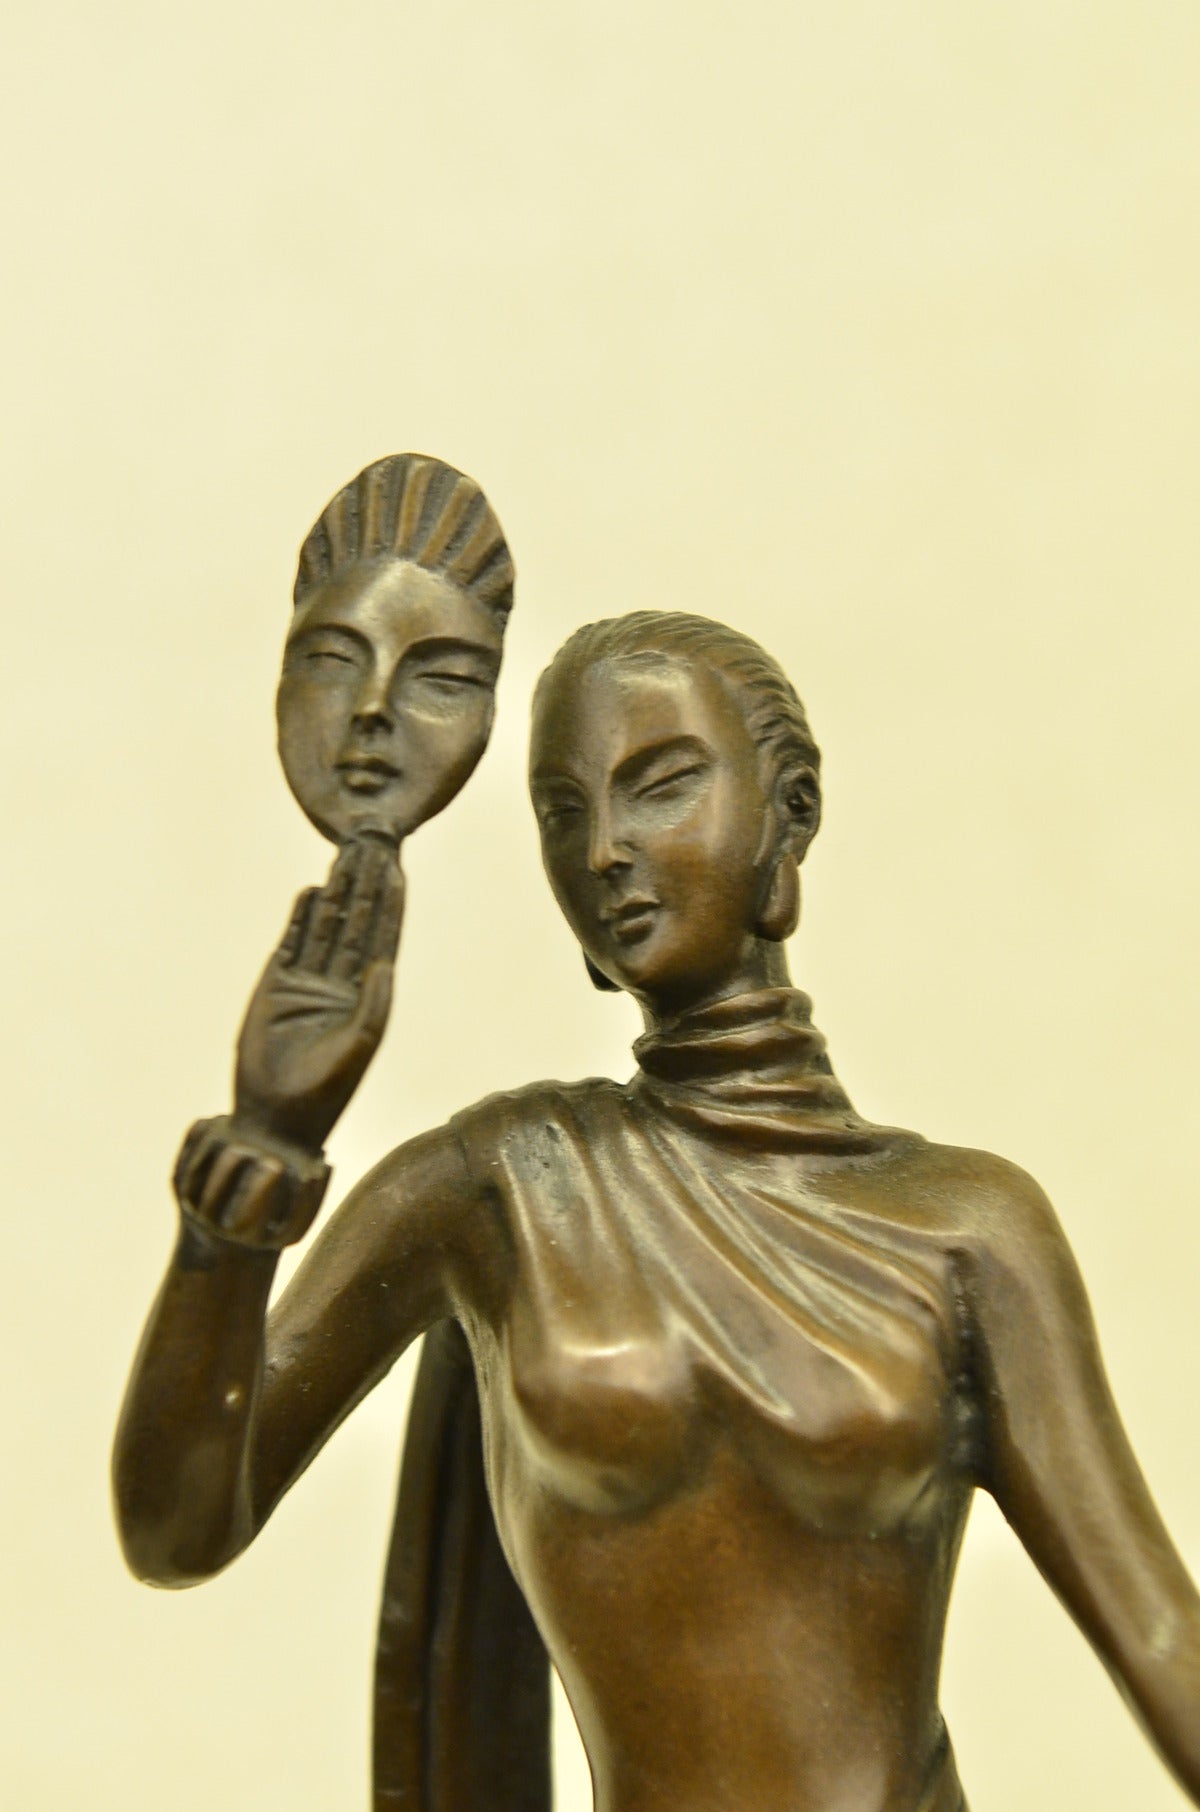 Handcrafted bronze sculpture SALE Decor Sensual Cast Hot Model 1920 Nouveau Art